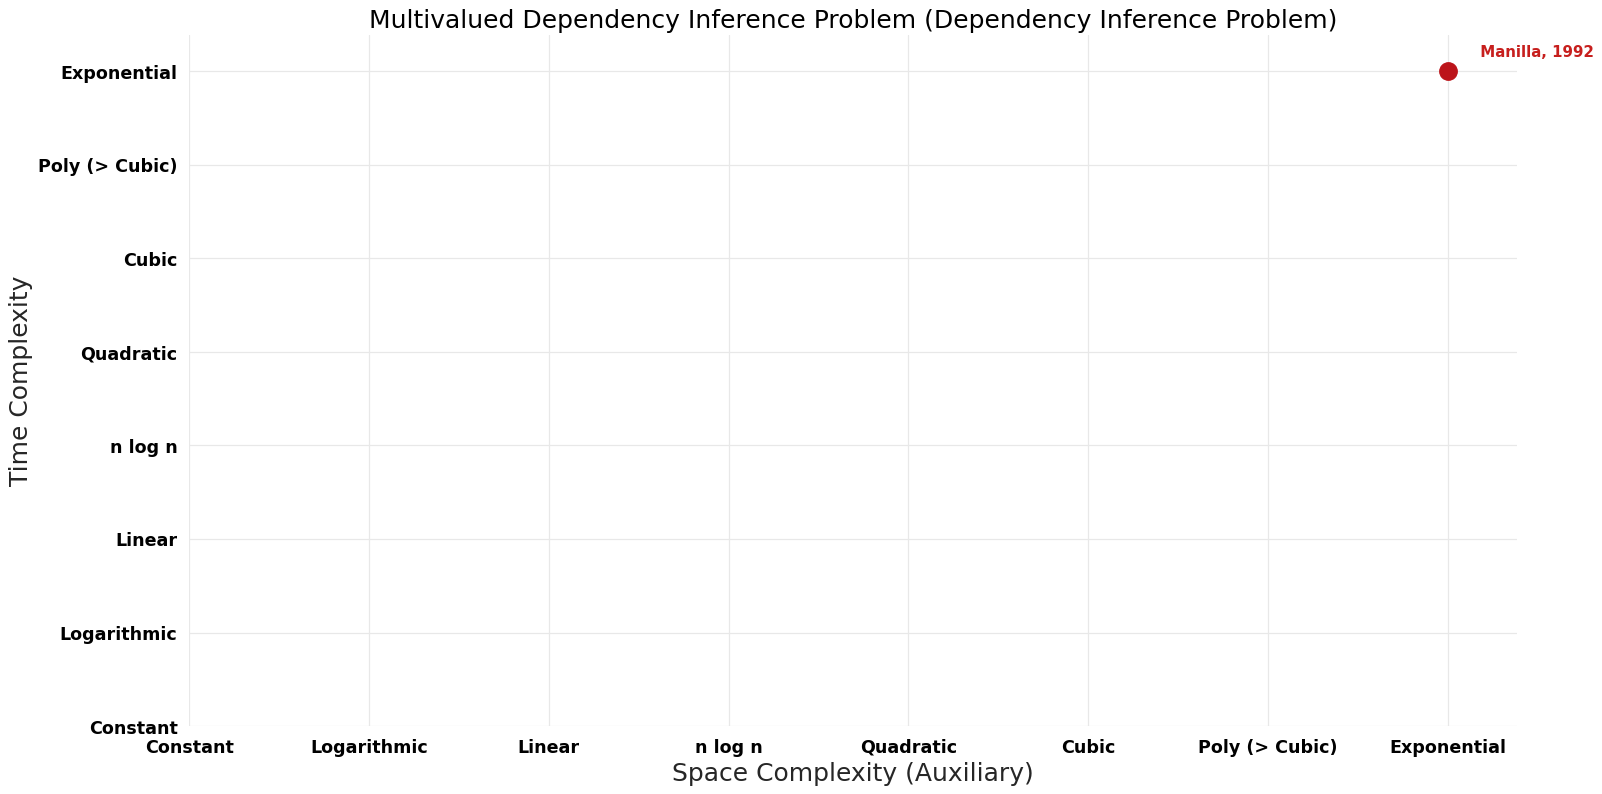 Dependency Inference Problem - Multivalued Dependency Inference Problem - Pareto Frontier.png